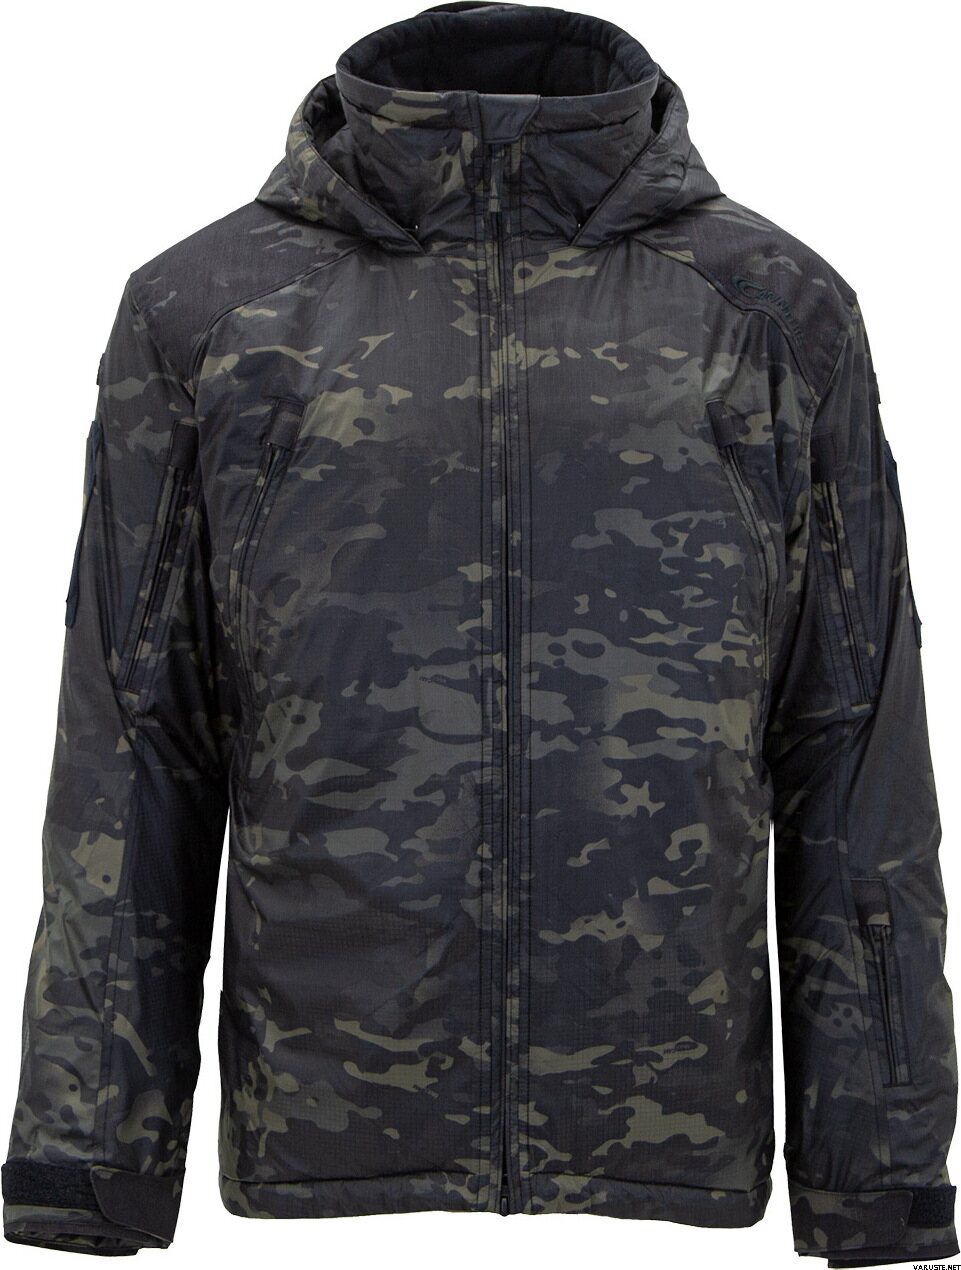 Carinthia MIG 4.0 Jacket, Multicam Black | Men's Winter Jackets ...